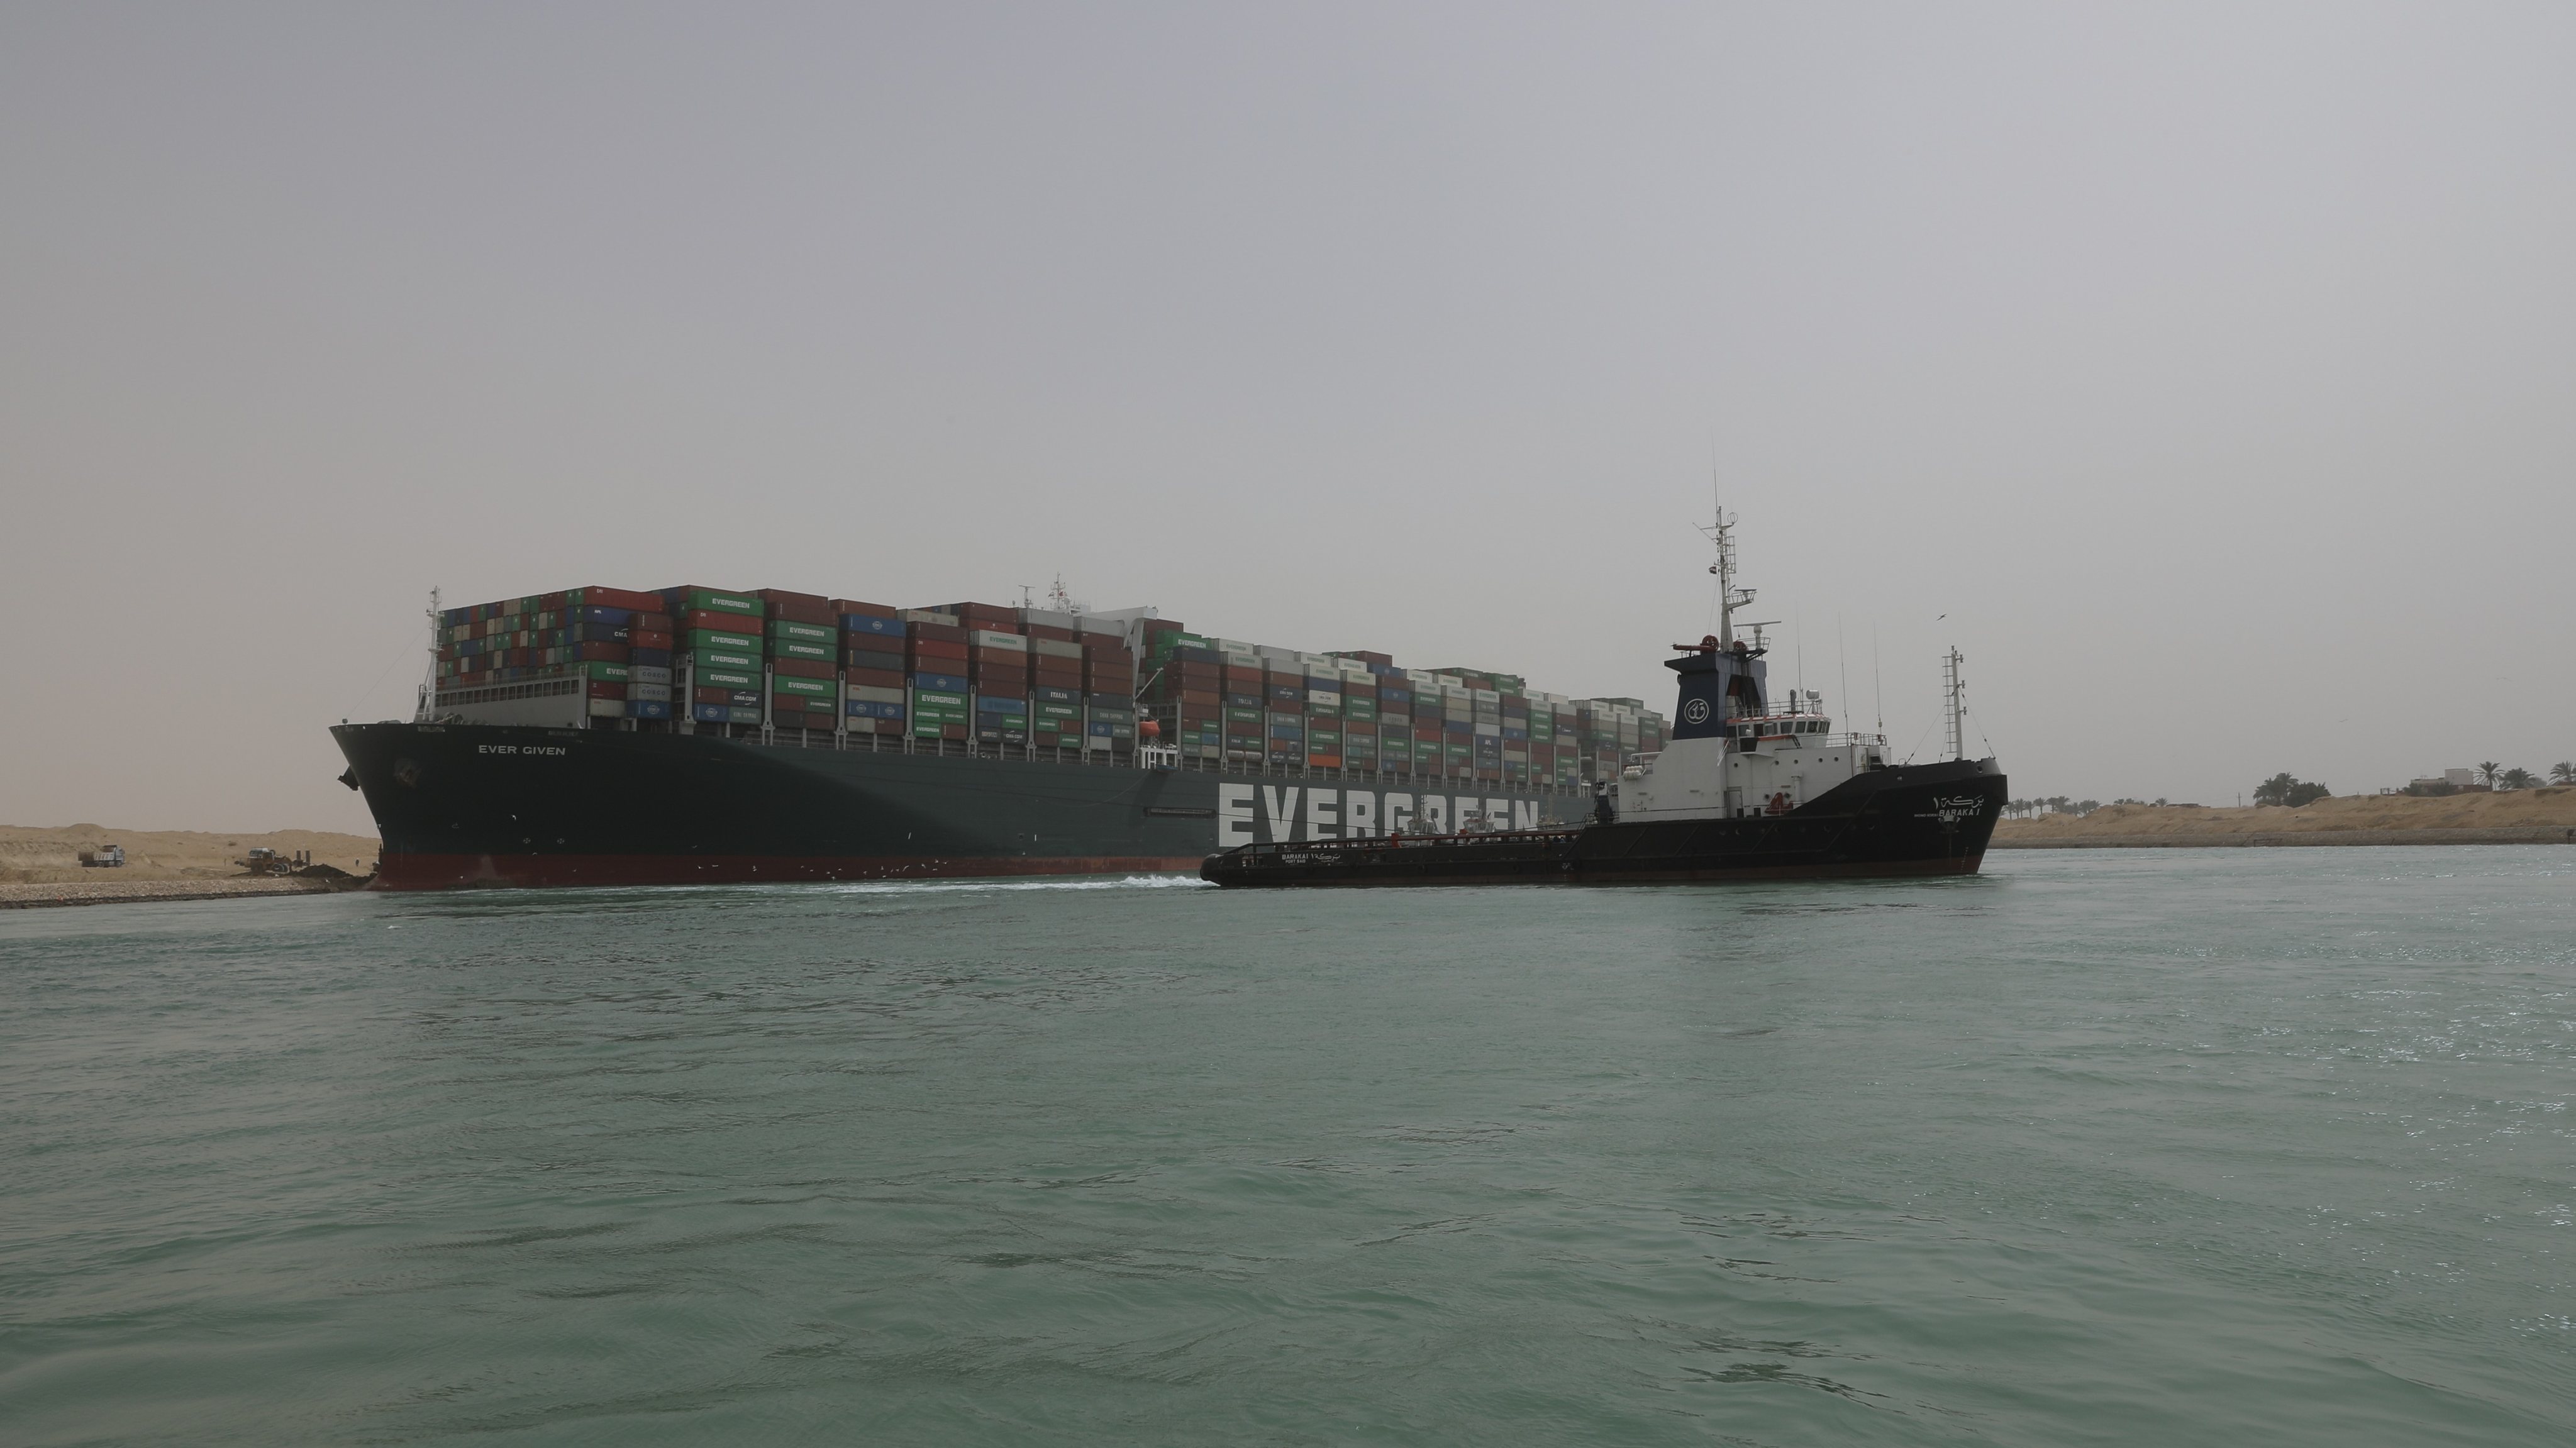 Navio Ever Given está a bloquear o Canal do Suez desde 23 de março